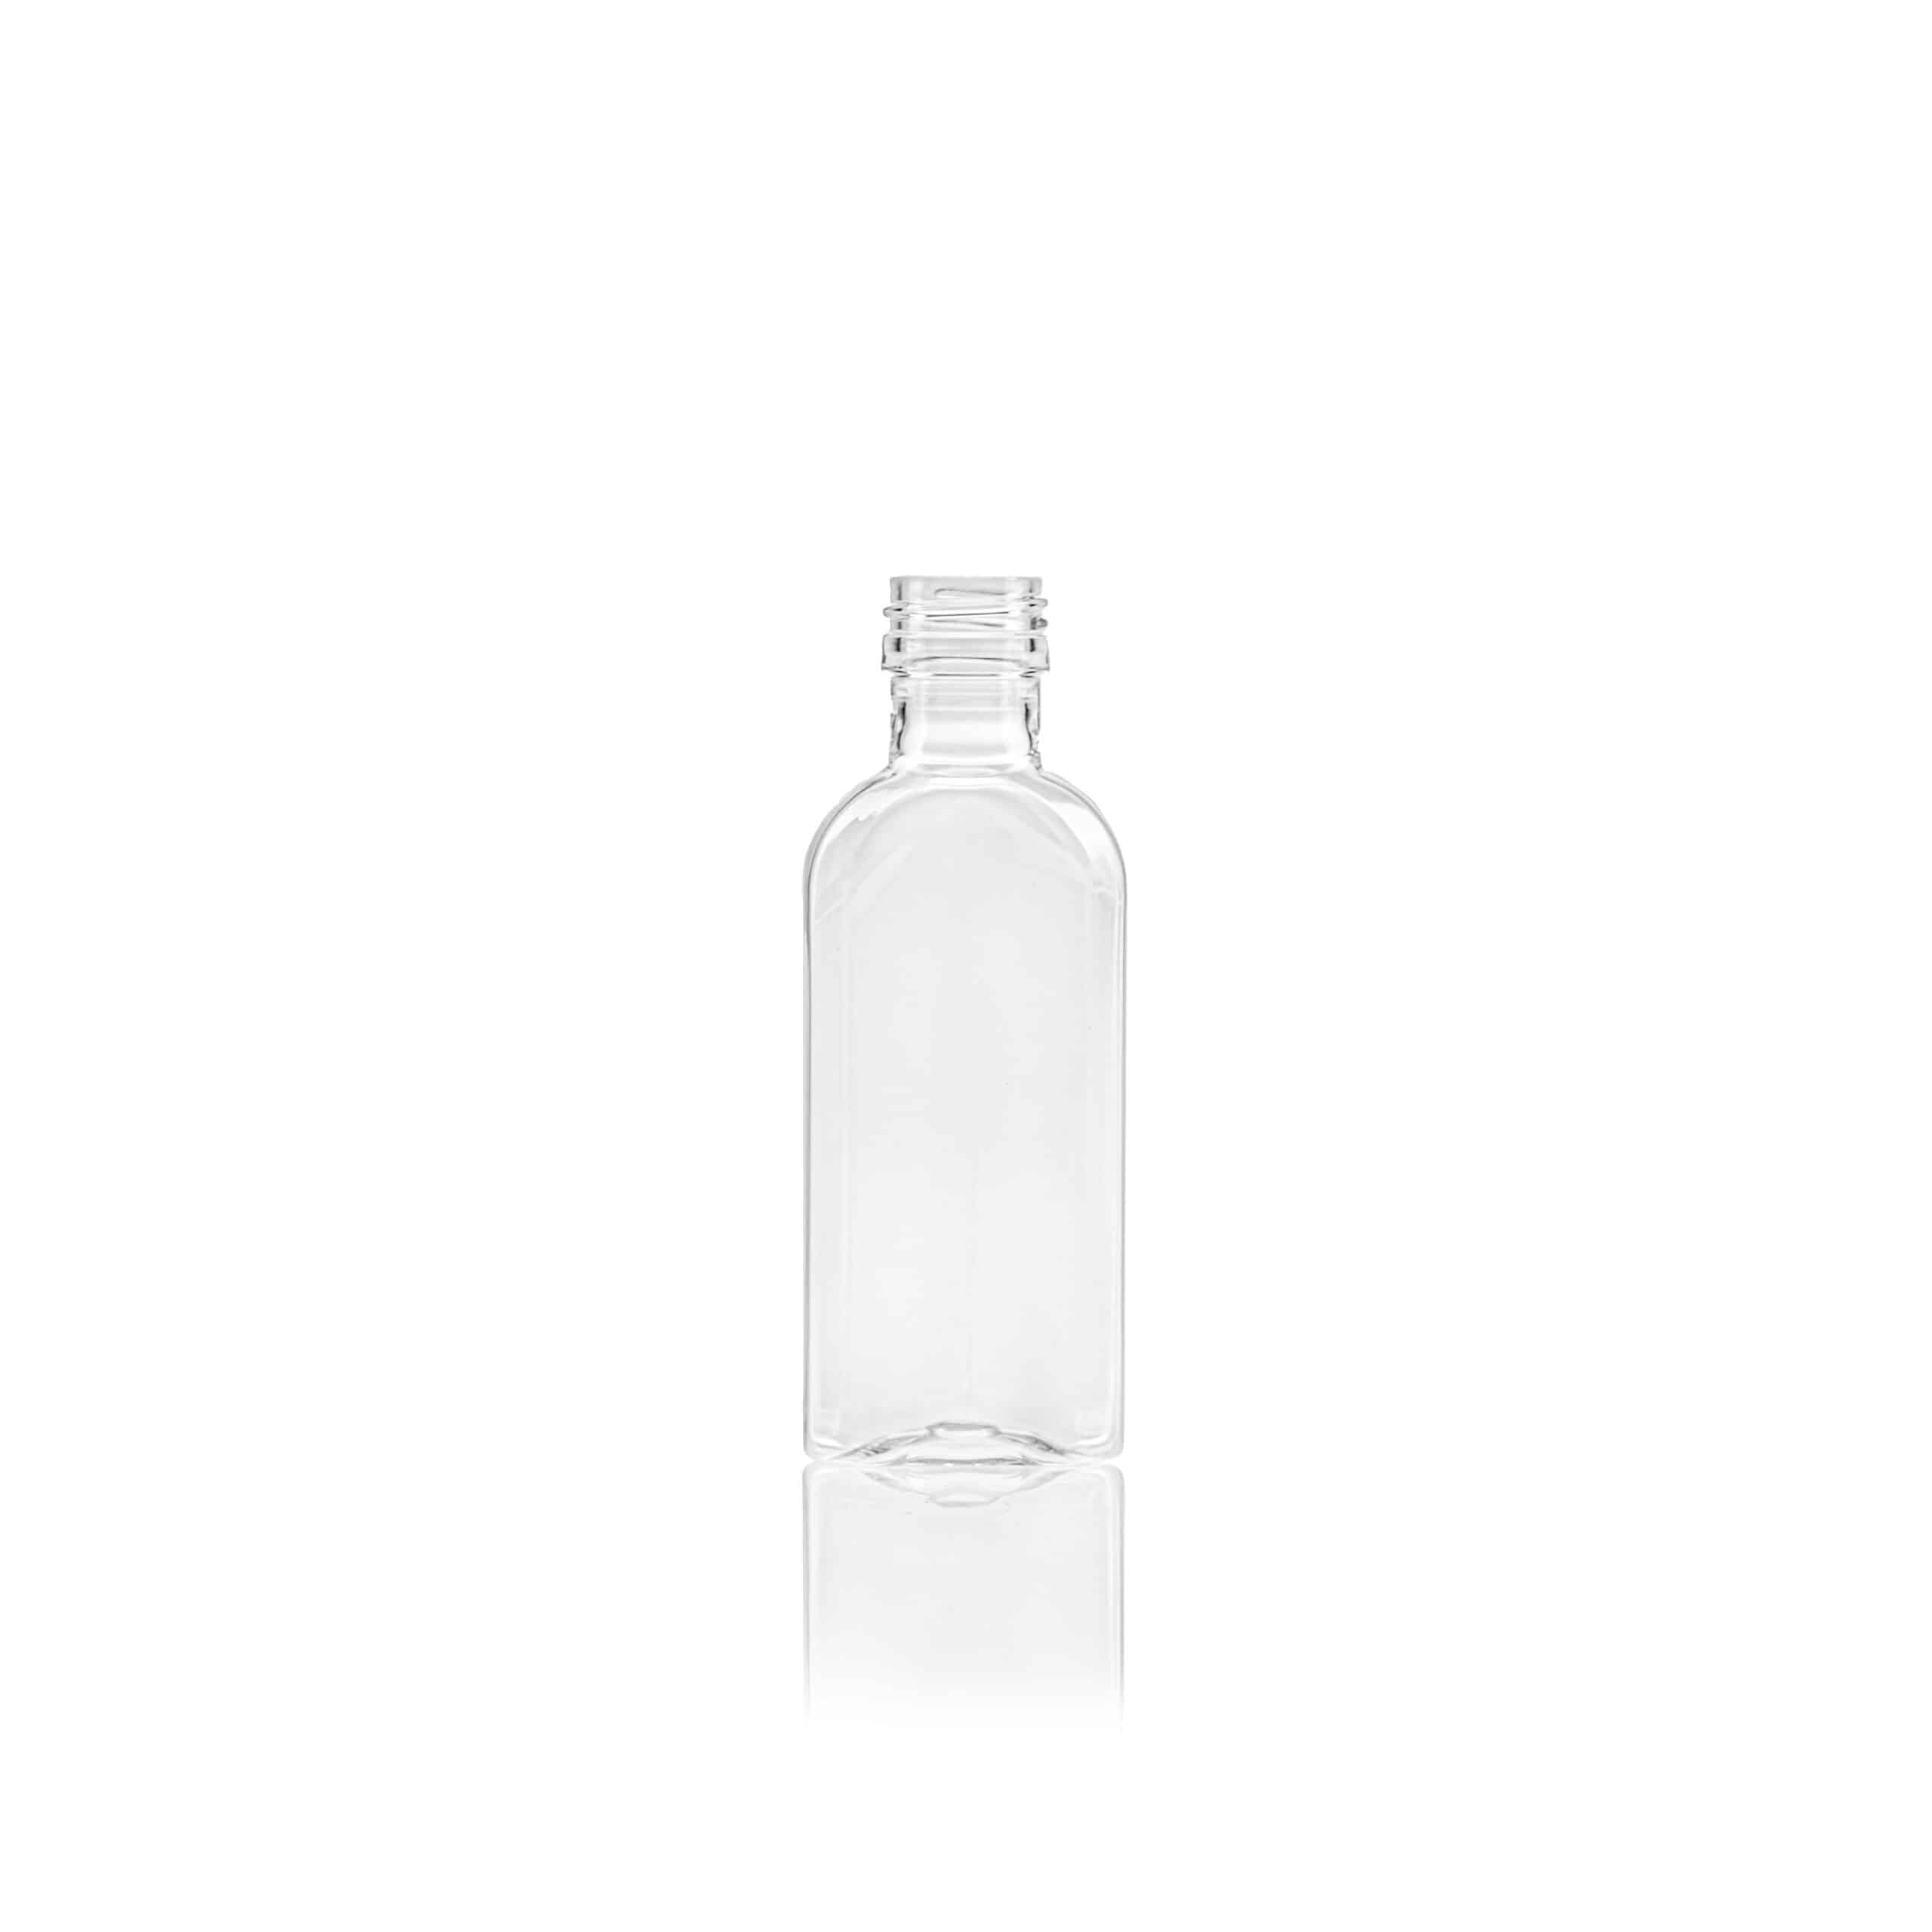 Bottle Meplat PET 100ml 25ROPP scaled Industrial